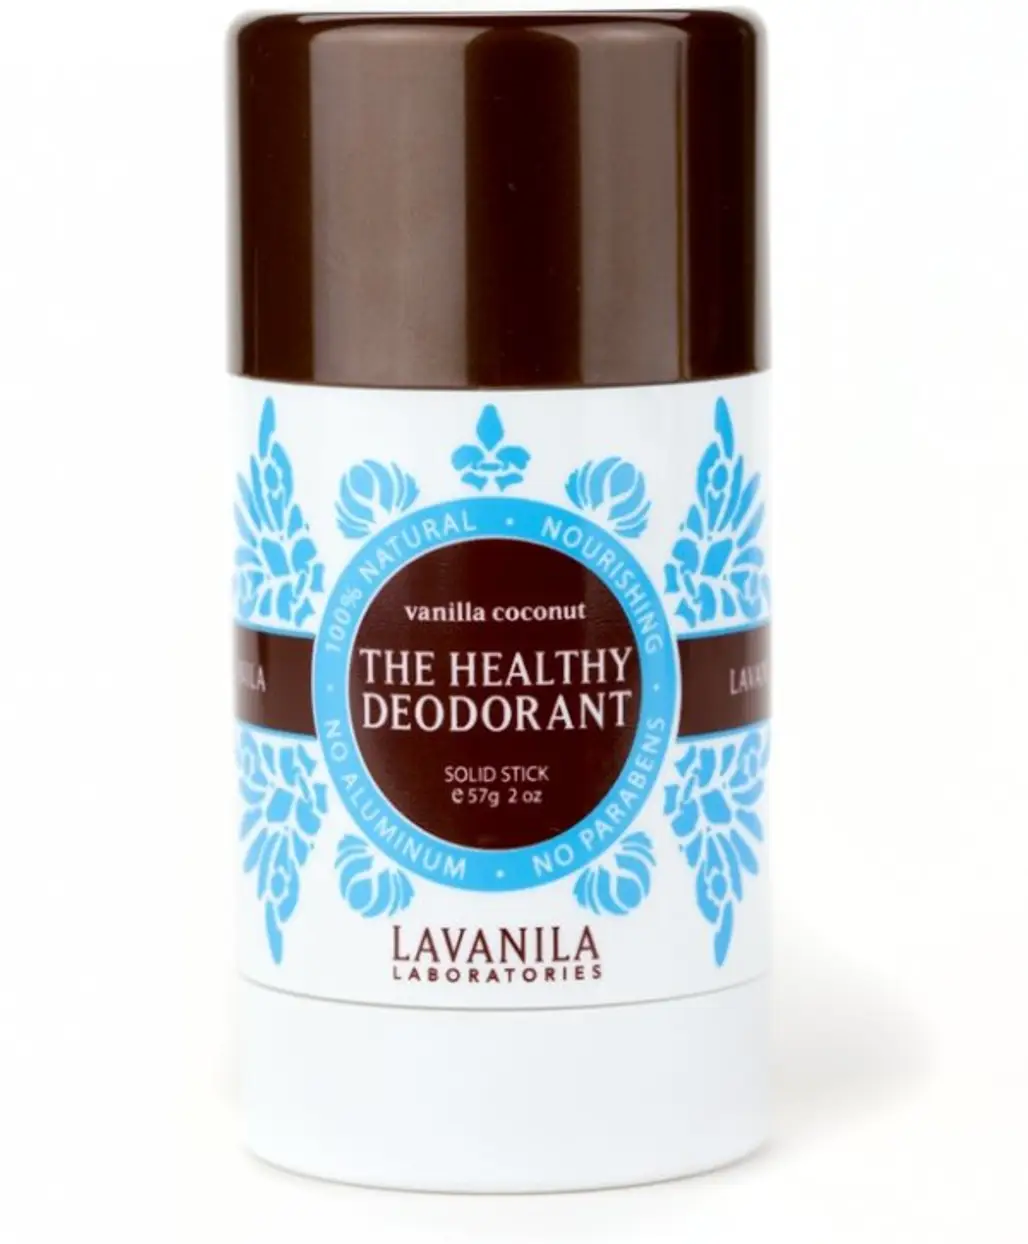 Lavanila Laboratories the Healthy Deodorant in Vanilla Coconut